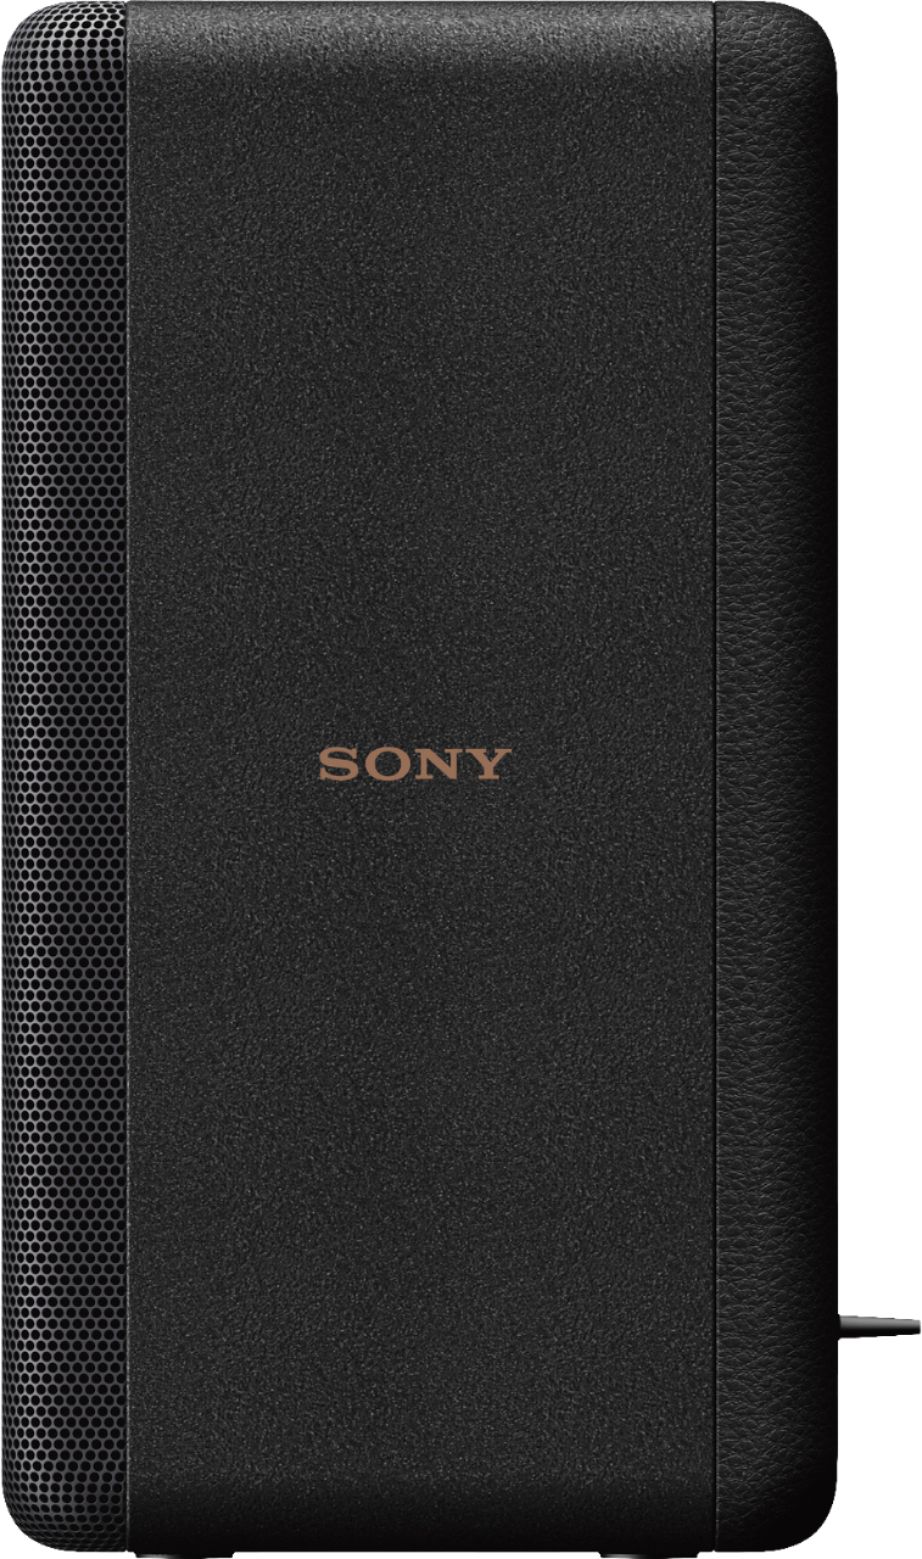 Sony SA-RS3S Wireless Rear Speaker - Black Best Buy SARS3S